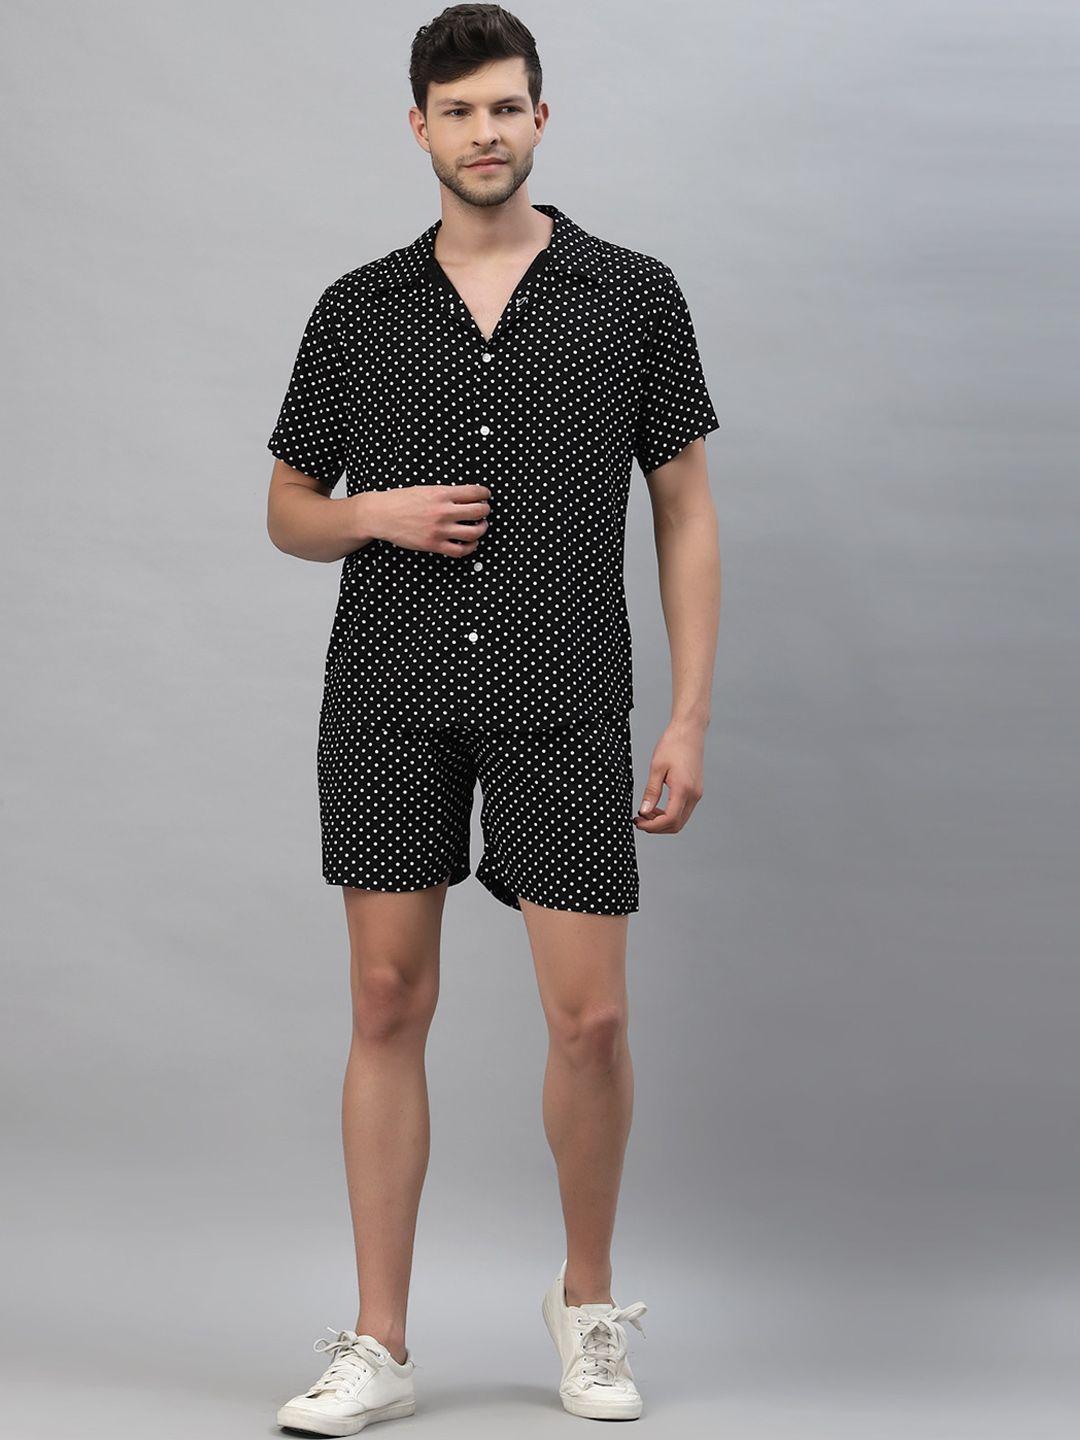 gavin paris printed shirt with shorts co-ords